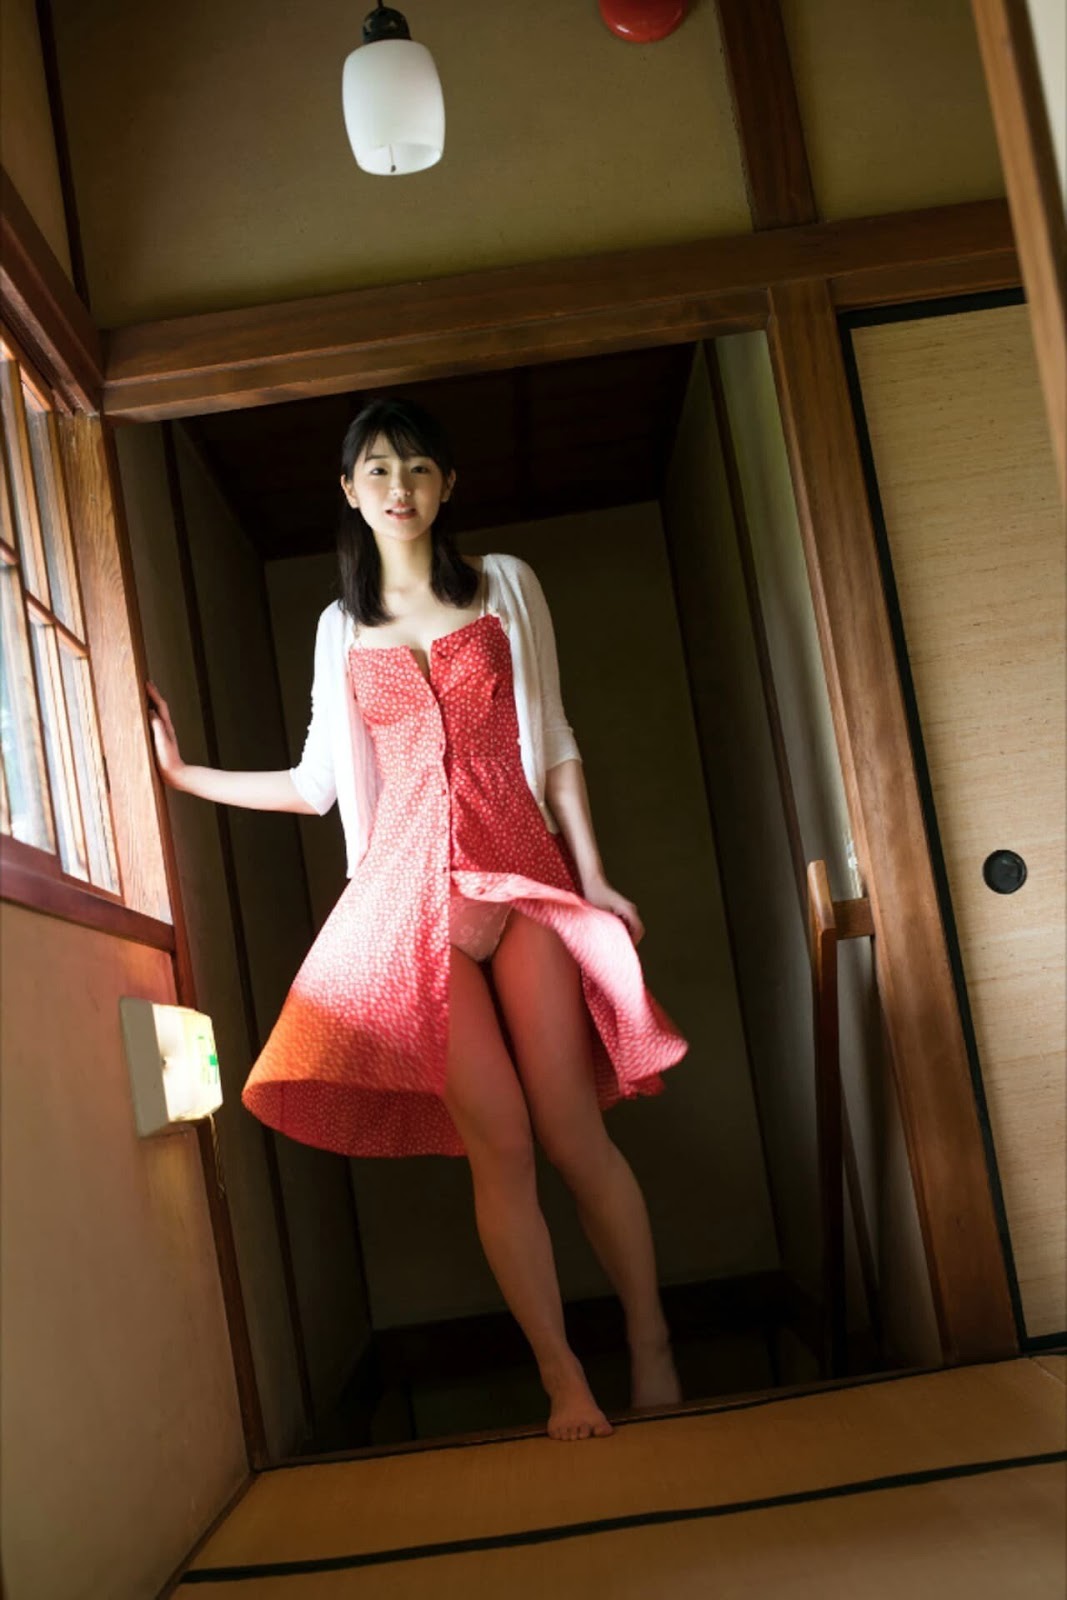 Kasumi Hasegawa, who has great hips.